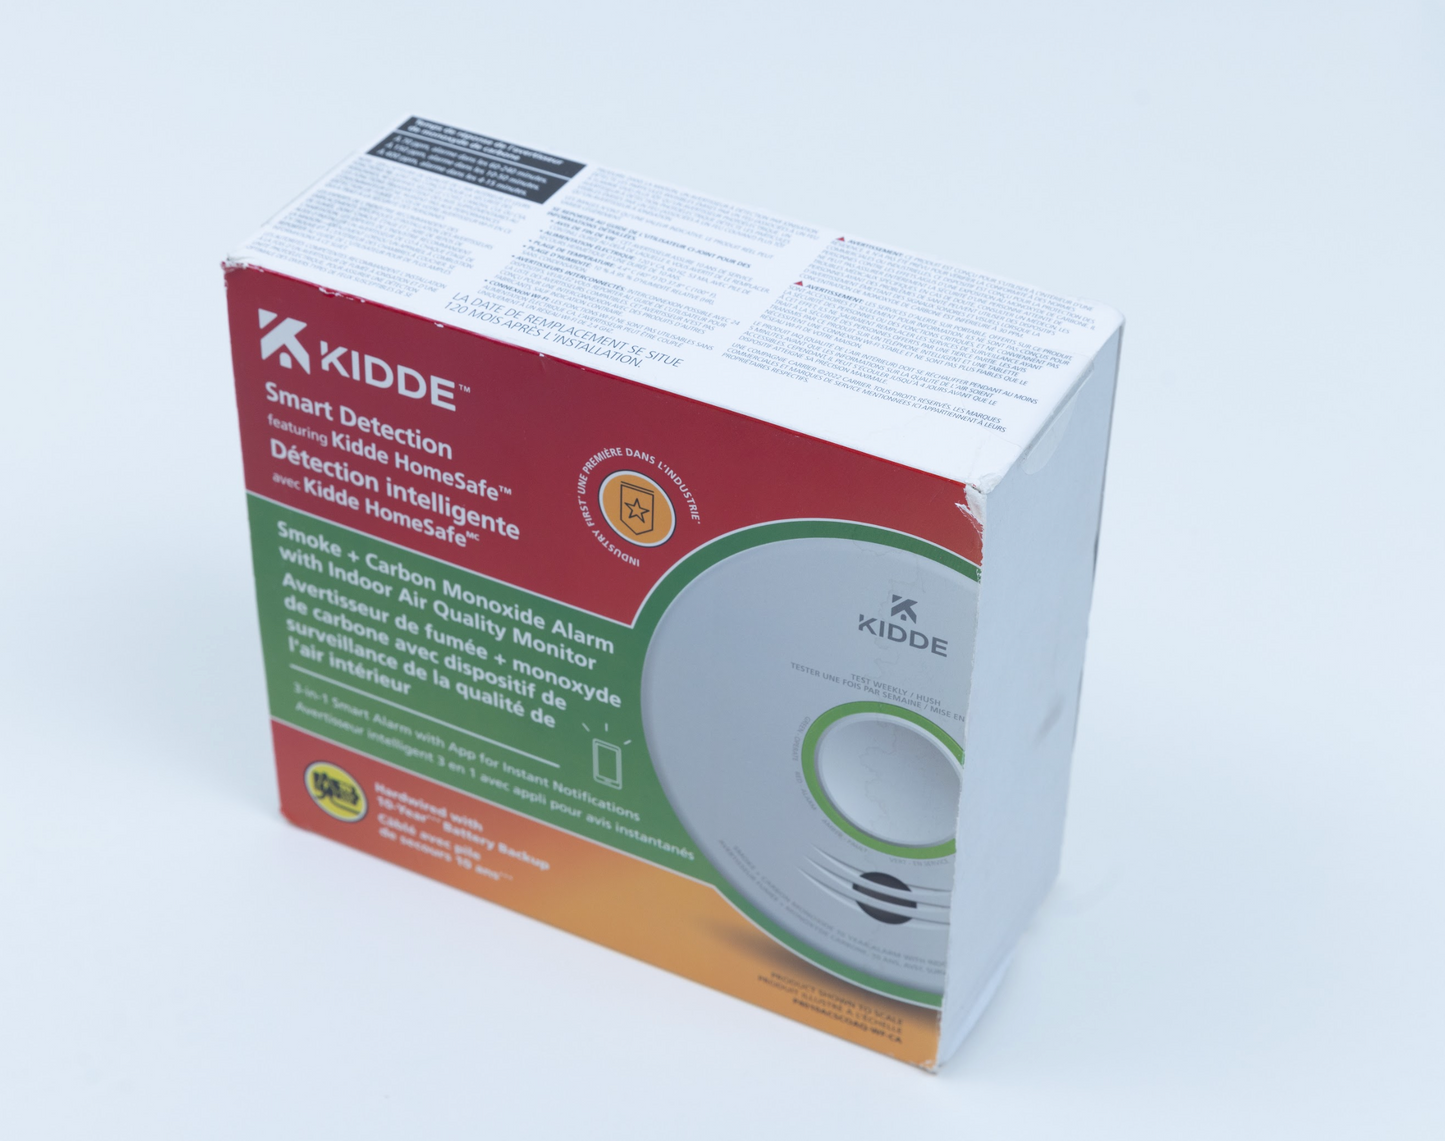 Kidde HomeSafe Smoke + Carbon Monoxide Alarm with Indoor Air Quality Monitor